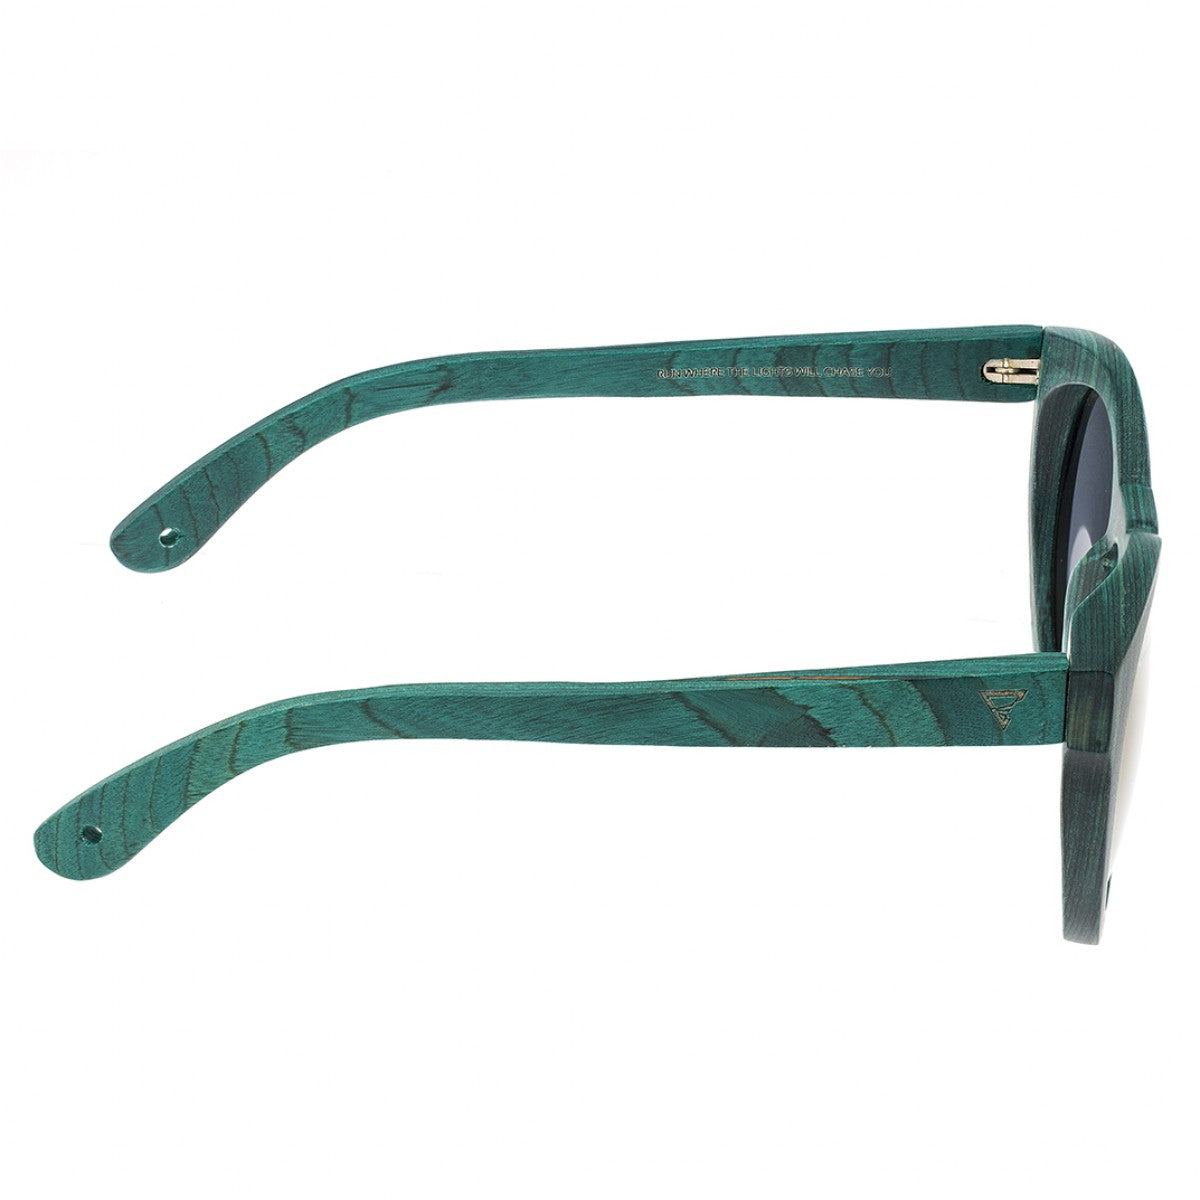 Spectrum Malloy Wood Polarized Sunglasses - Teal/Gold - SSGS122GD